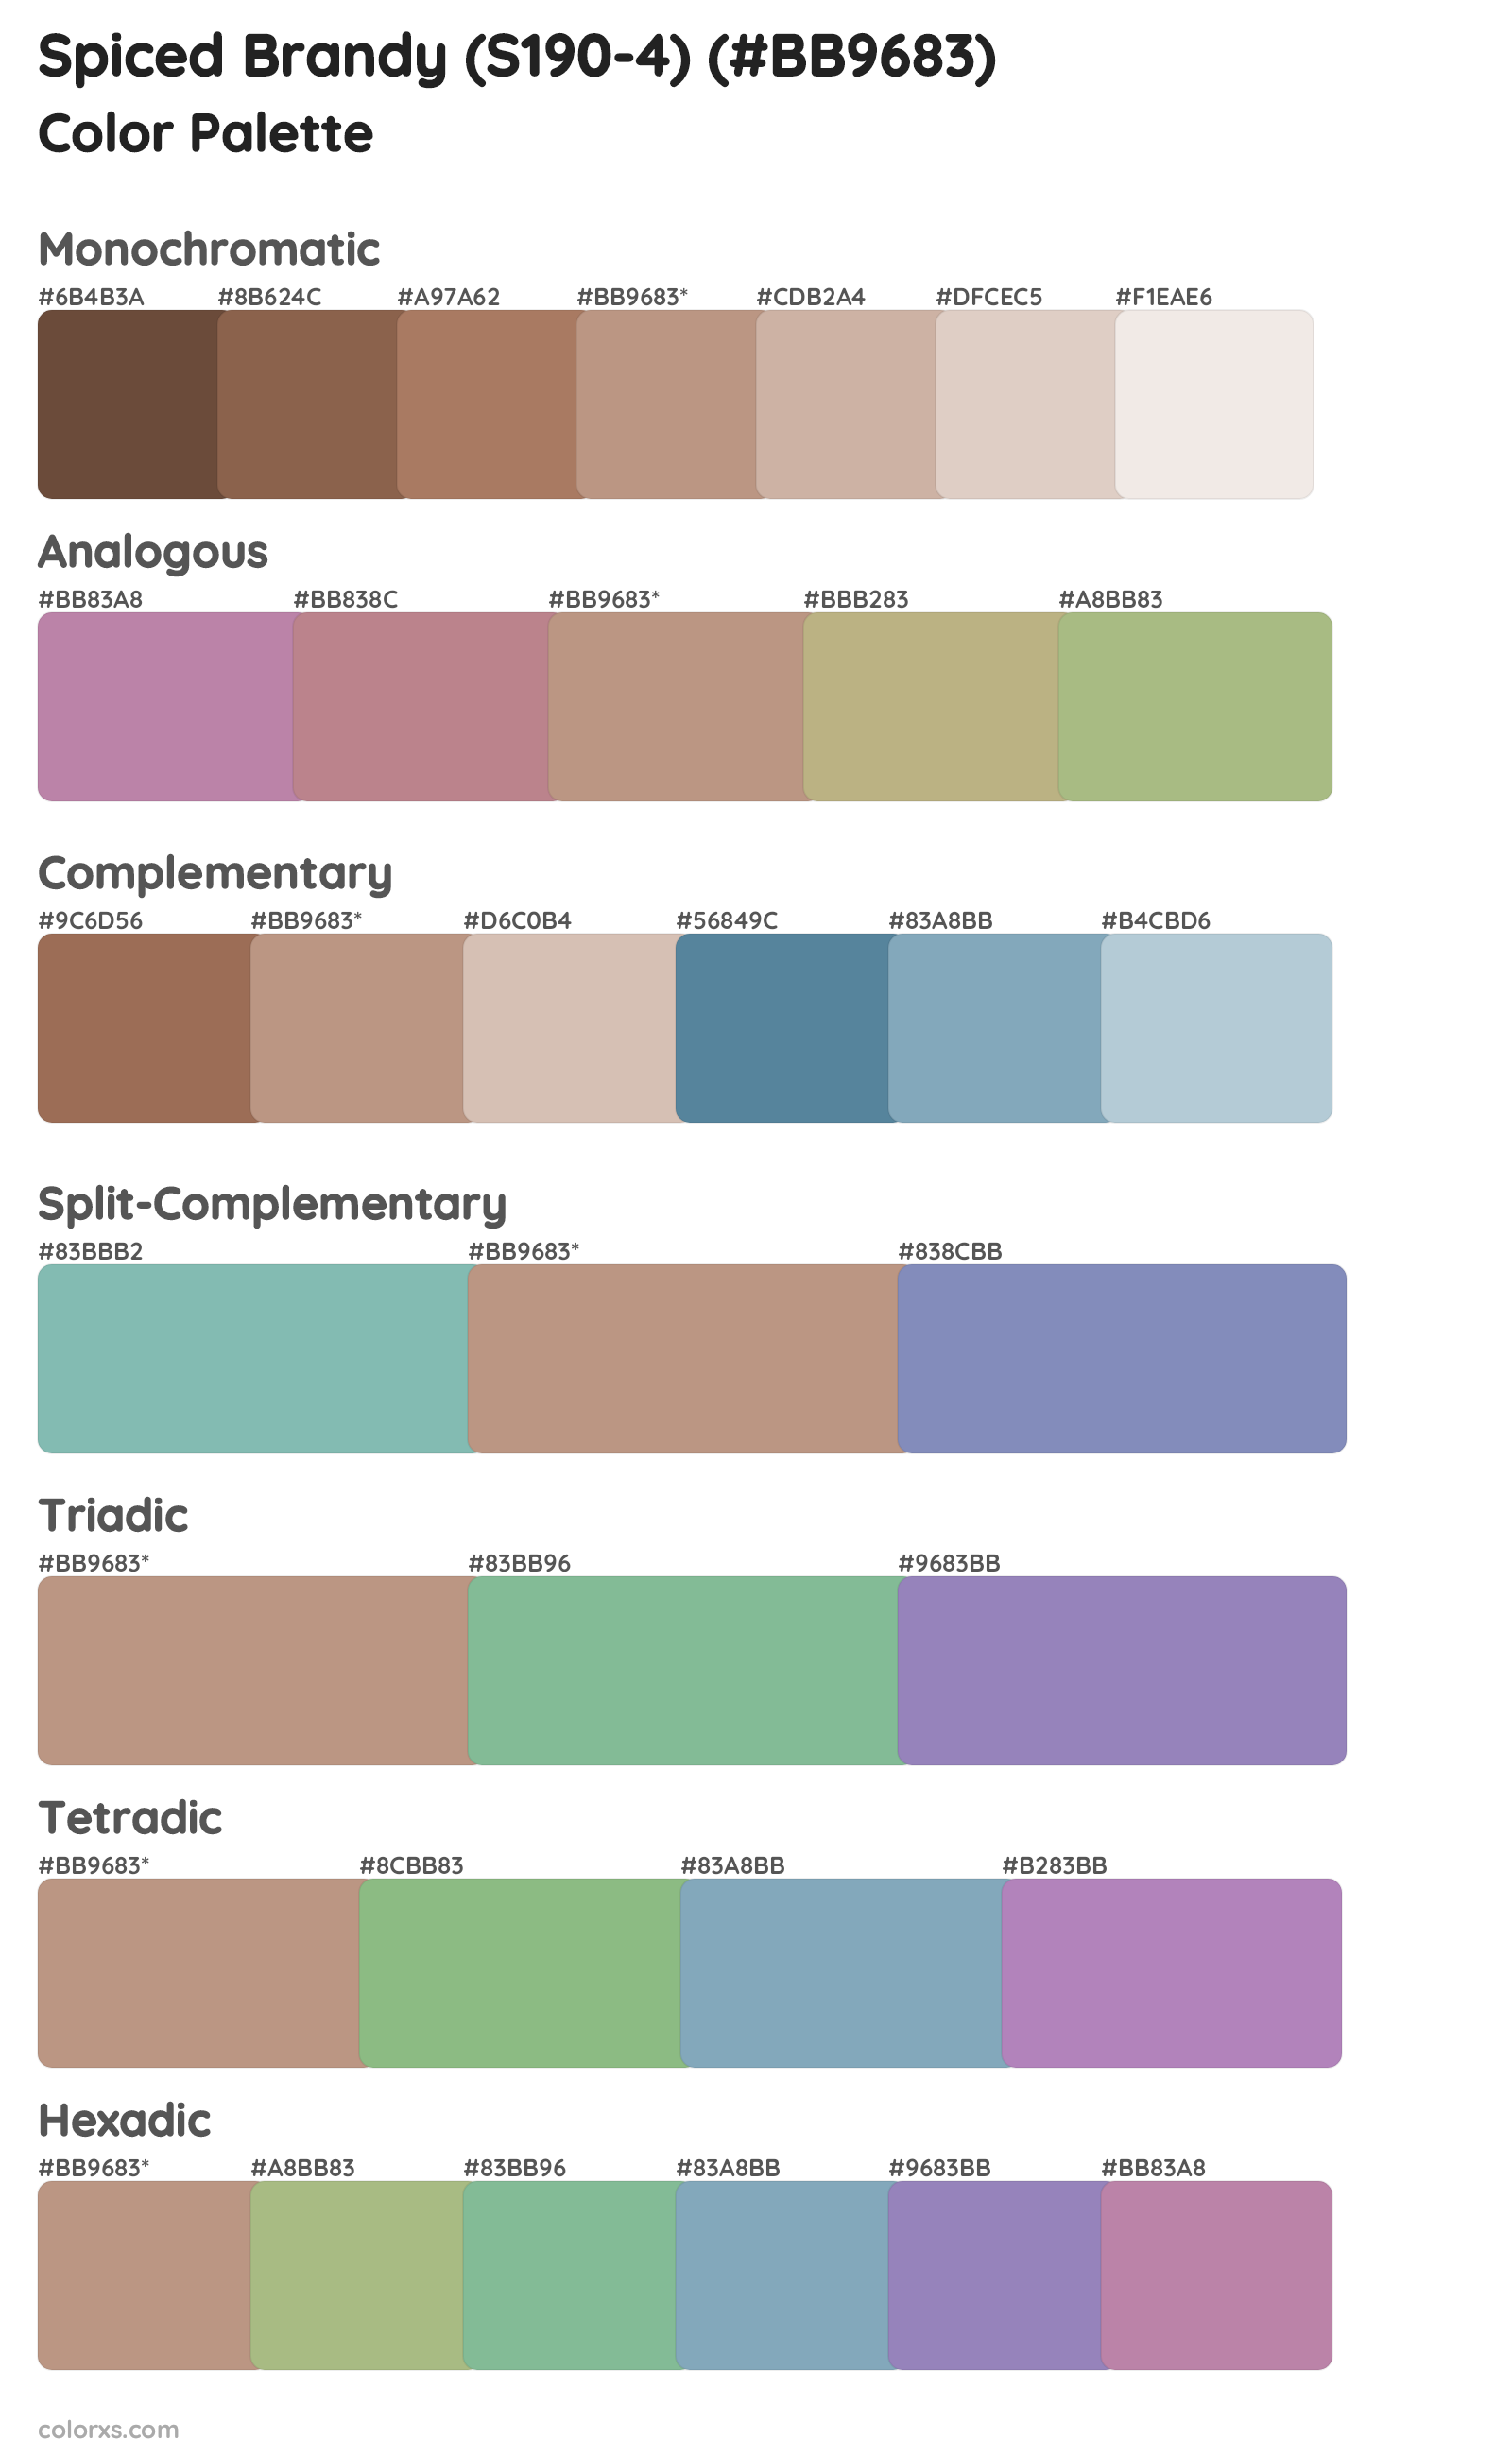 Spiced Brandy (S190-4) Color Scheme Palettes